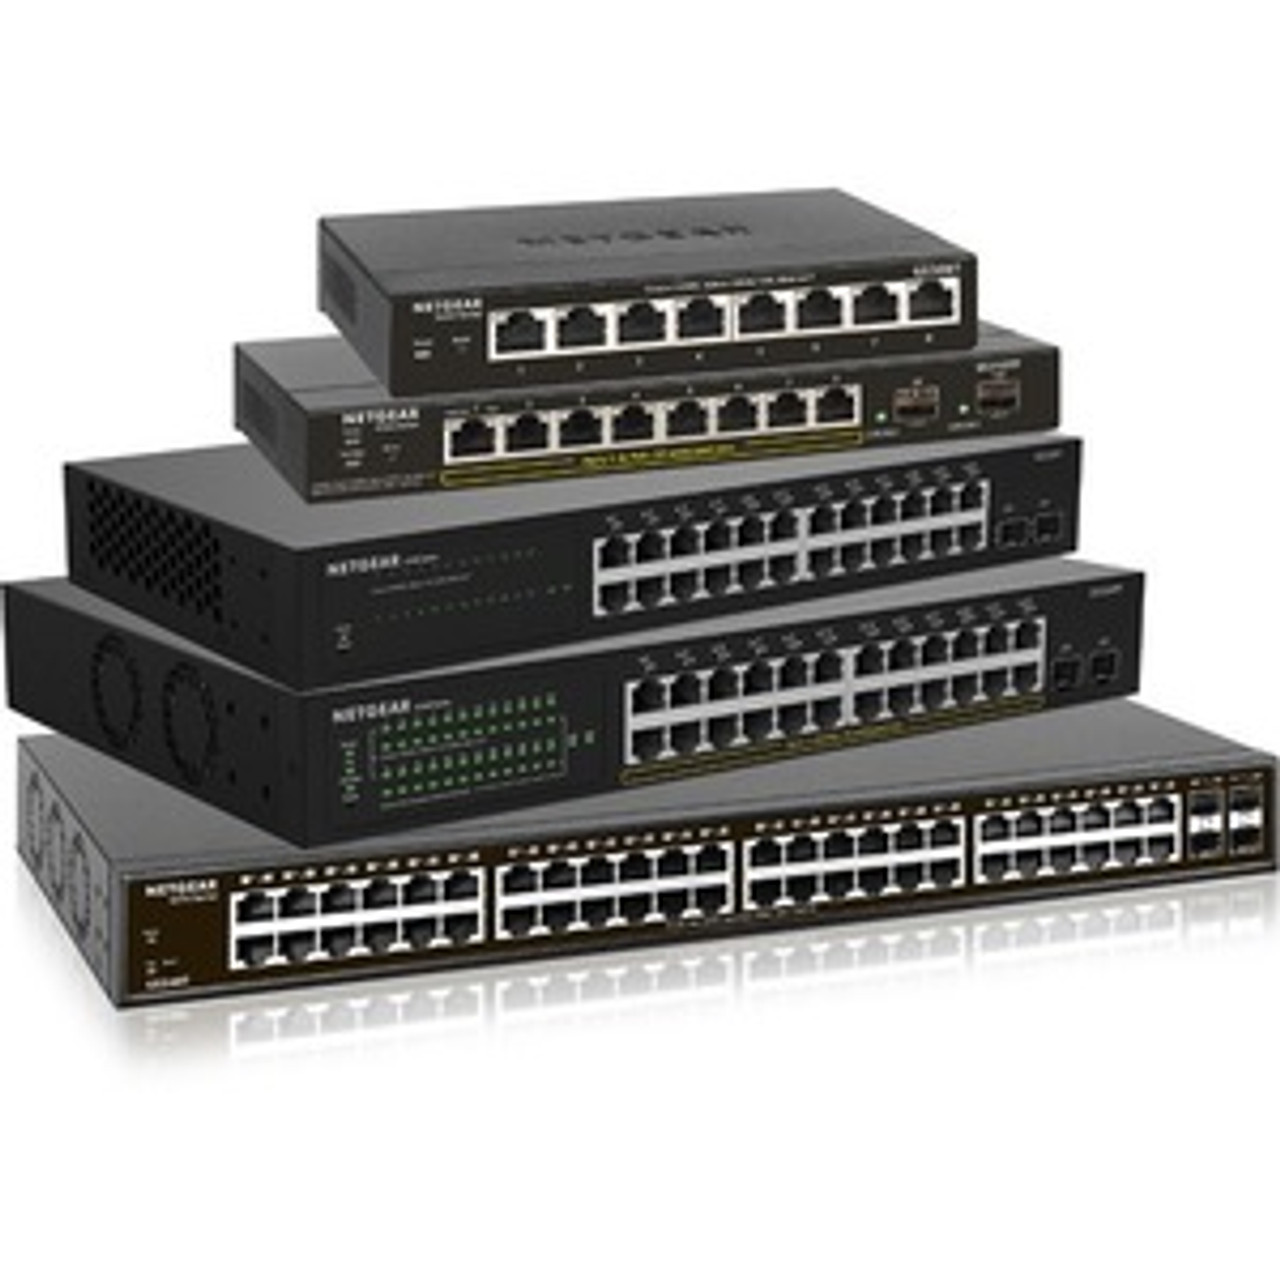 GS310TP-100NAS Netgear S350 GS308TP Ethernet Switch - 8 Ports - Manage